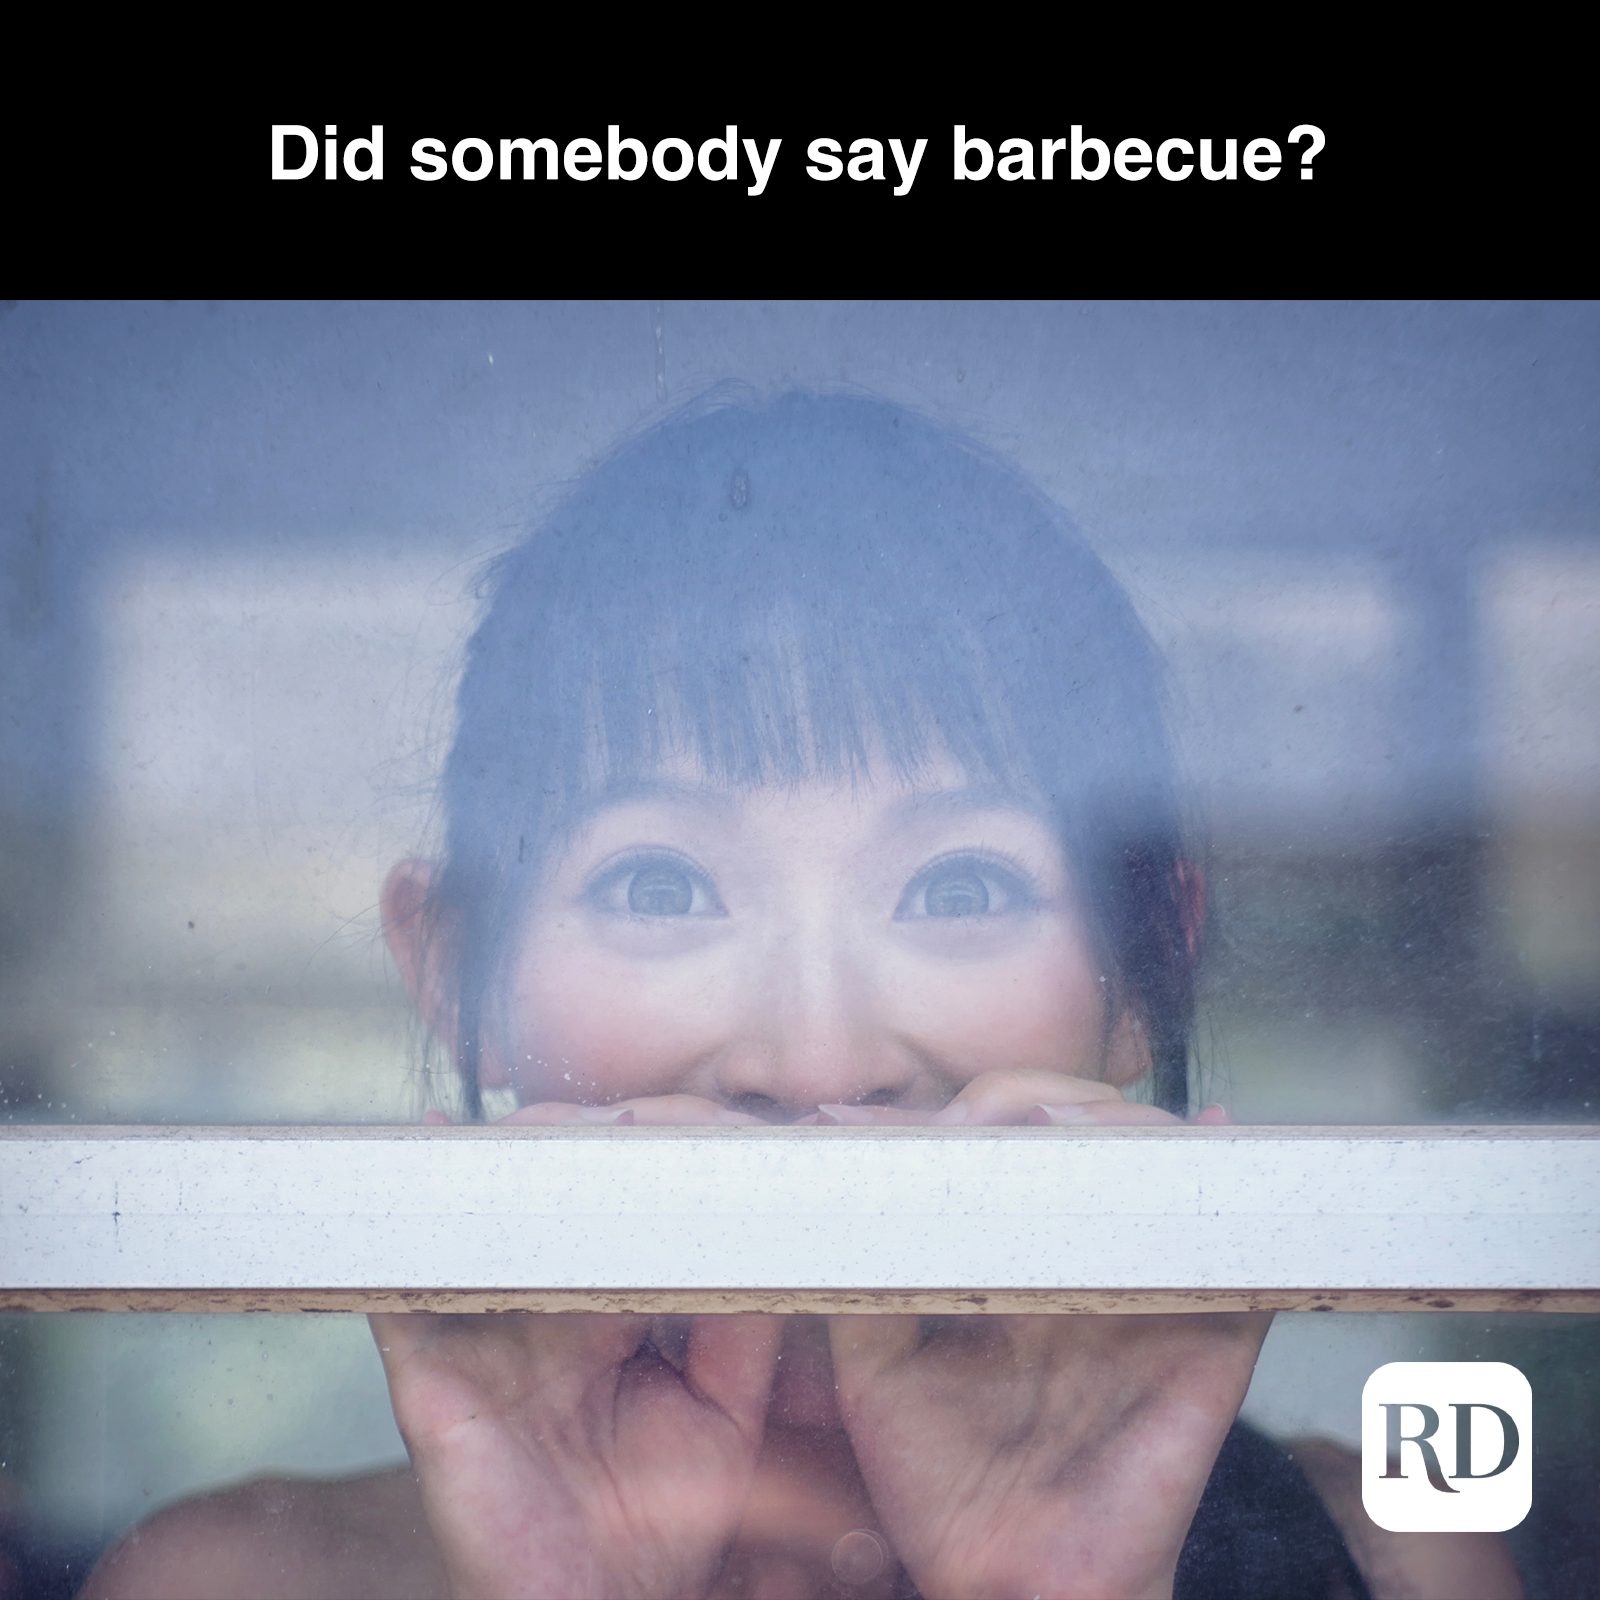 Woman peeking through window MEME TEXT: Did somebody say barbecue?